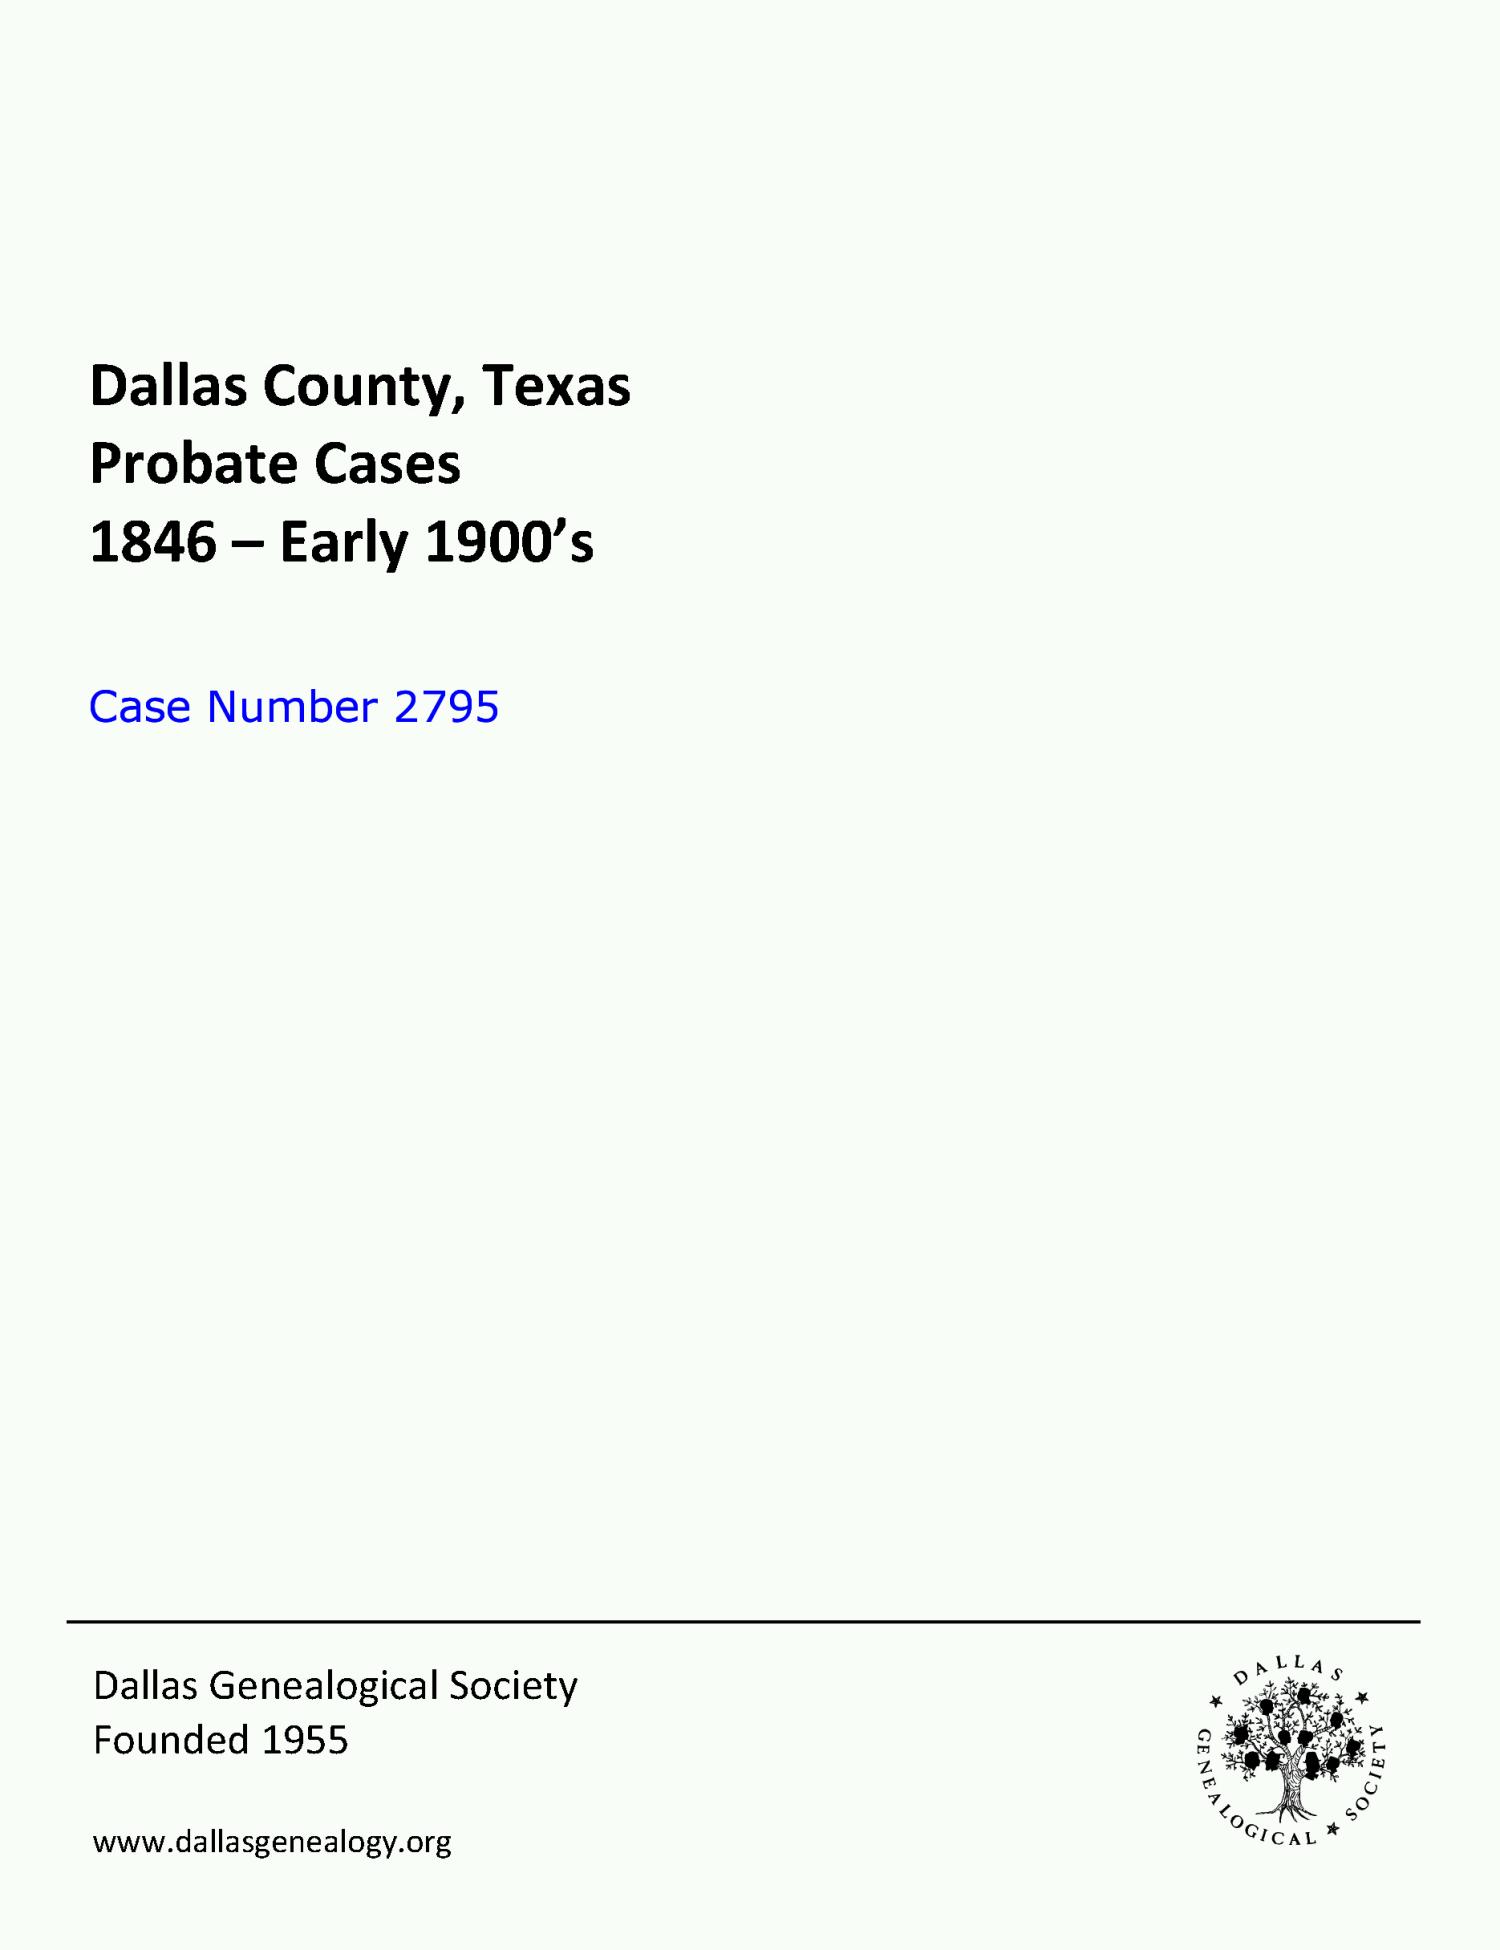 Dallas County Probate Case 2795: Yates, Milla (Deceased)
                                                
                                                    [Sequence #]: 1 of 20
                                                